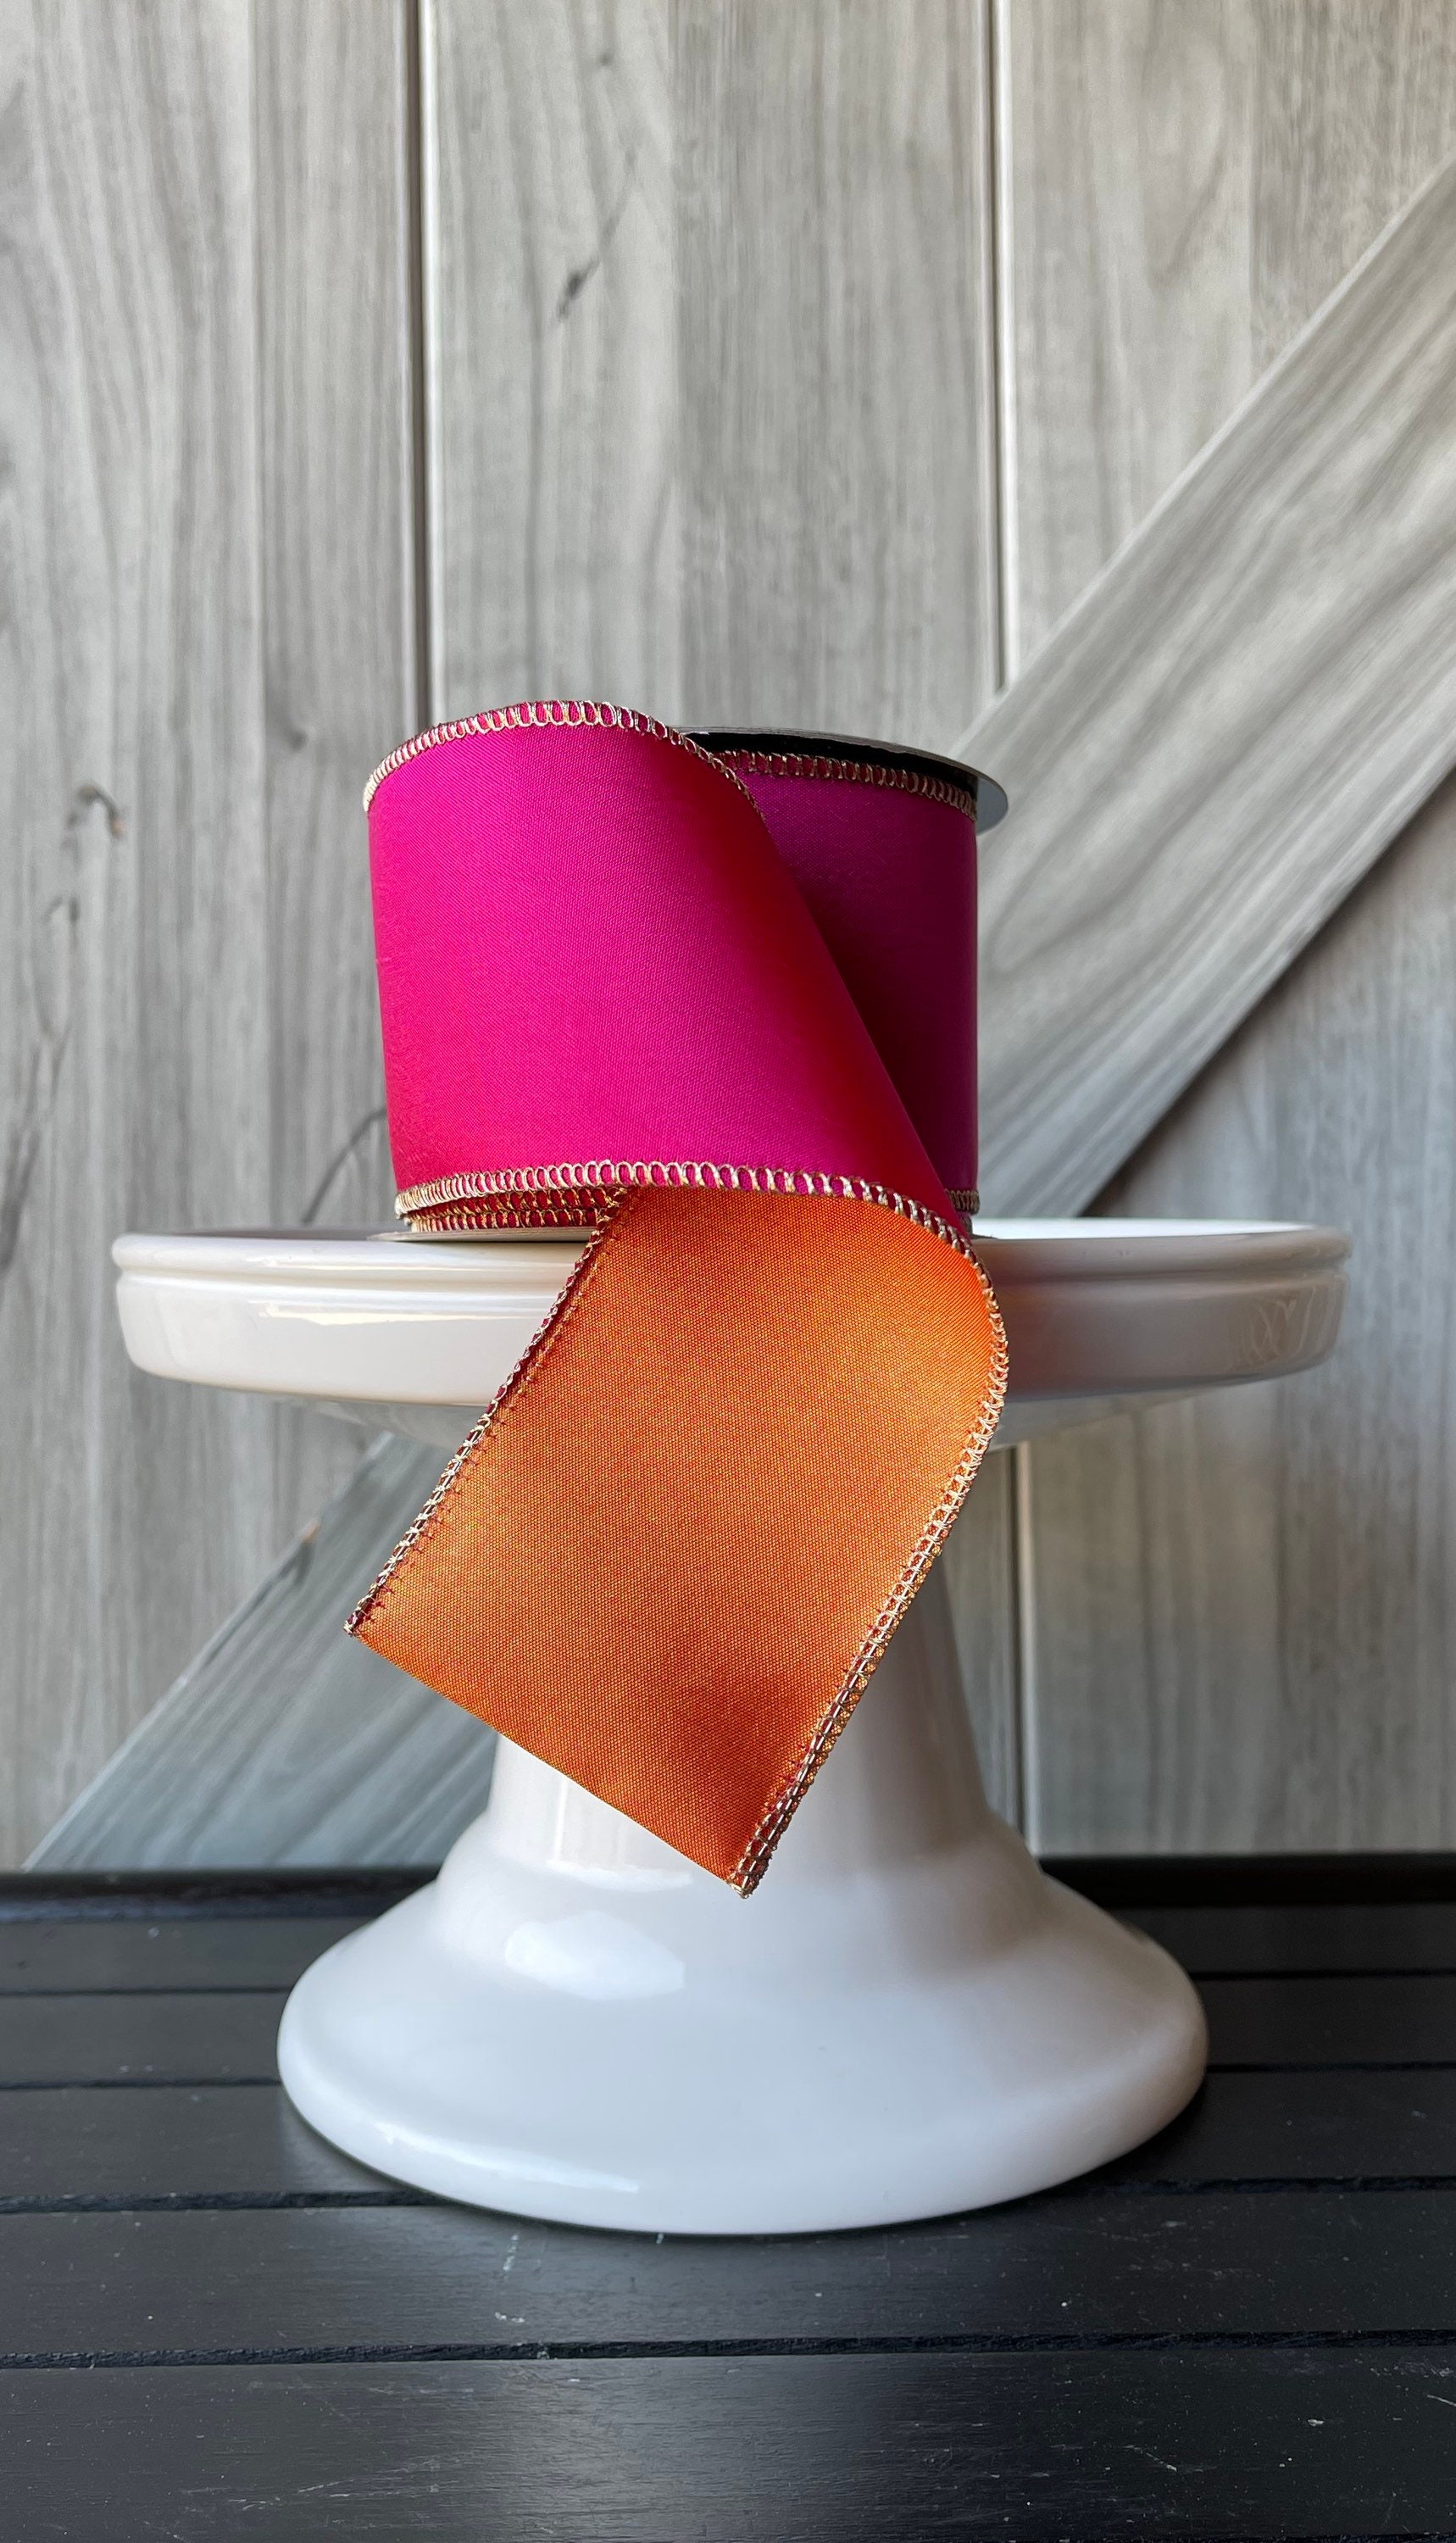 Hot Pink And Orange Reversible Taffeta Ribbon